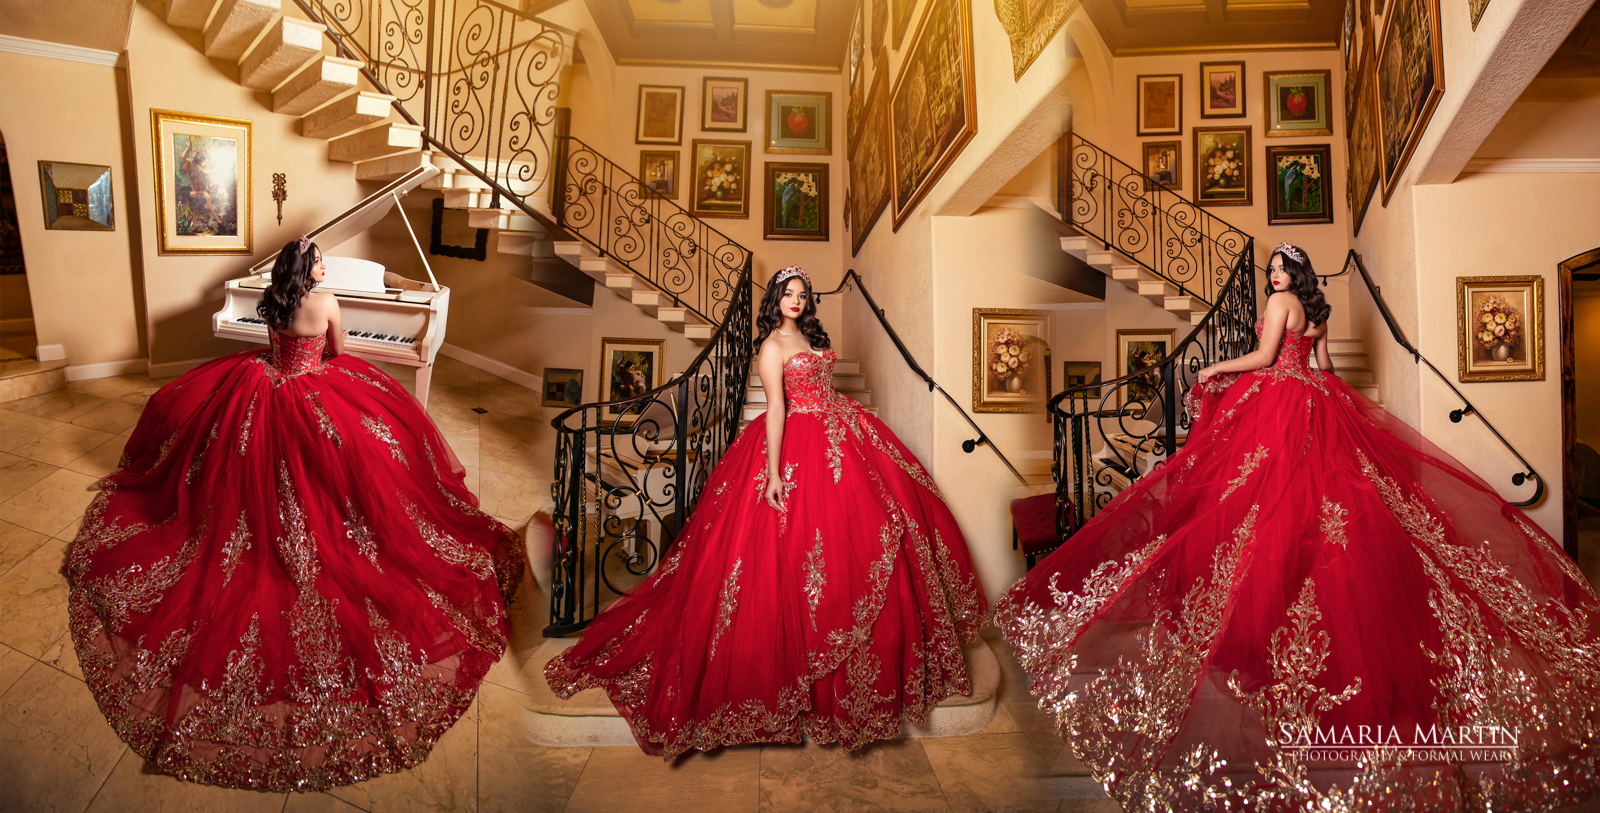 Villa Toscana Quinceanera, custom photoshoot quinceanera, Red Glam dresses, Samaria Martin best photographer, quinceaneras photoshoot in Miami (1)